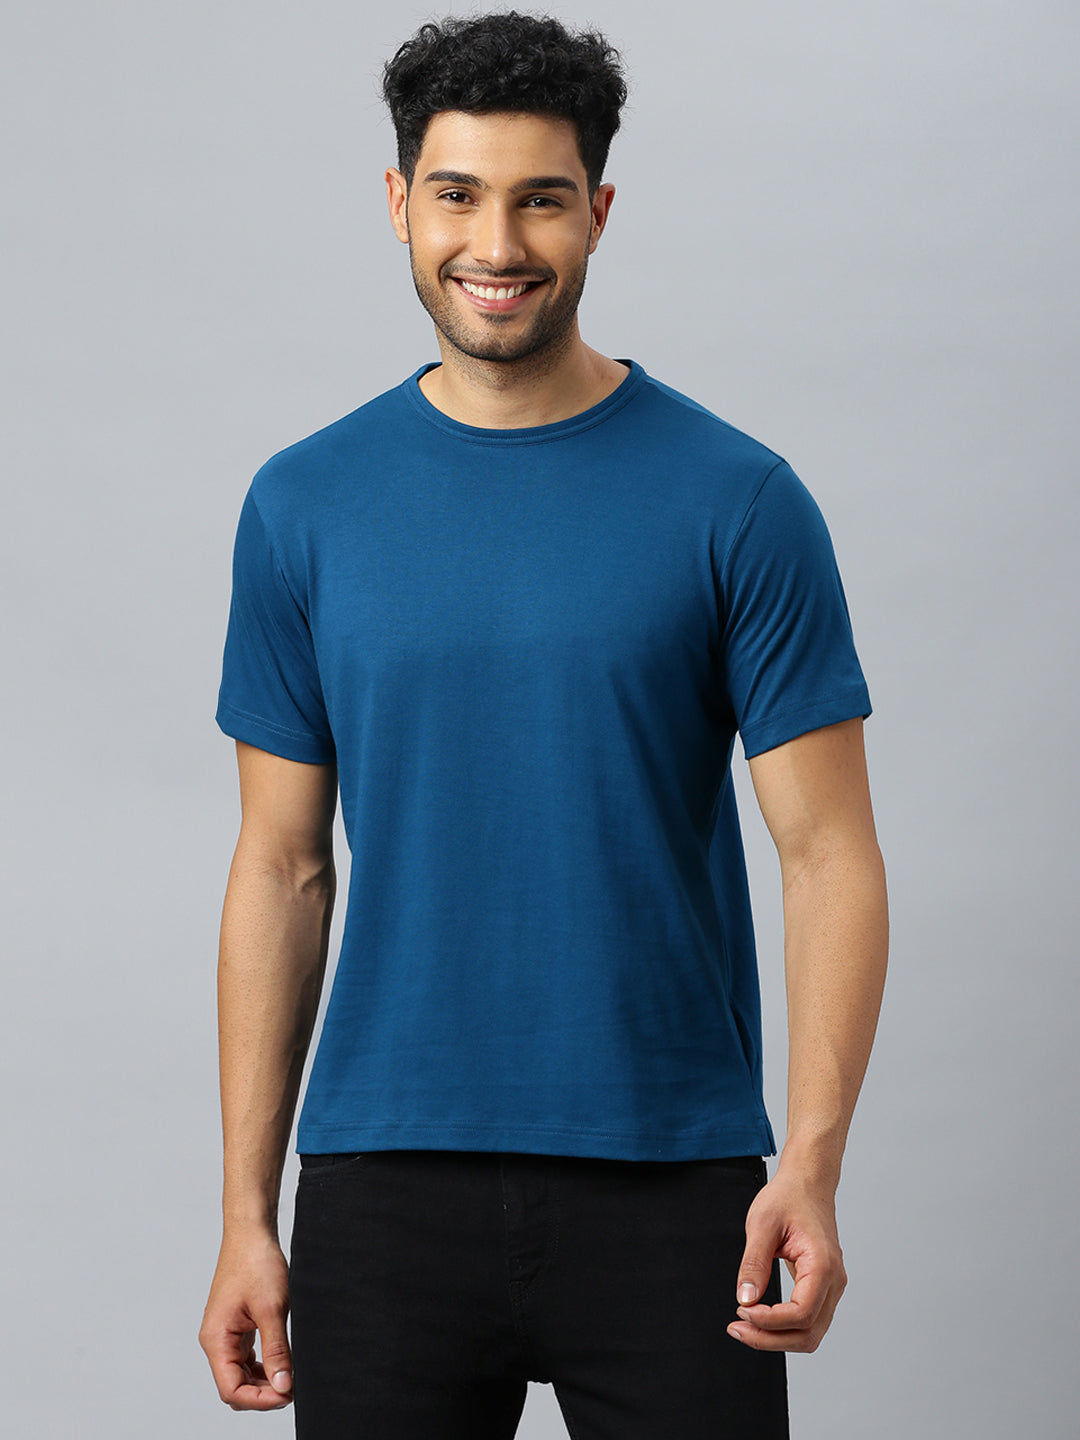 Don Vino Men's Dark Blue Solid Crew Neck T-Shirt